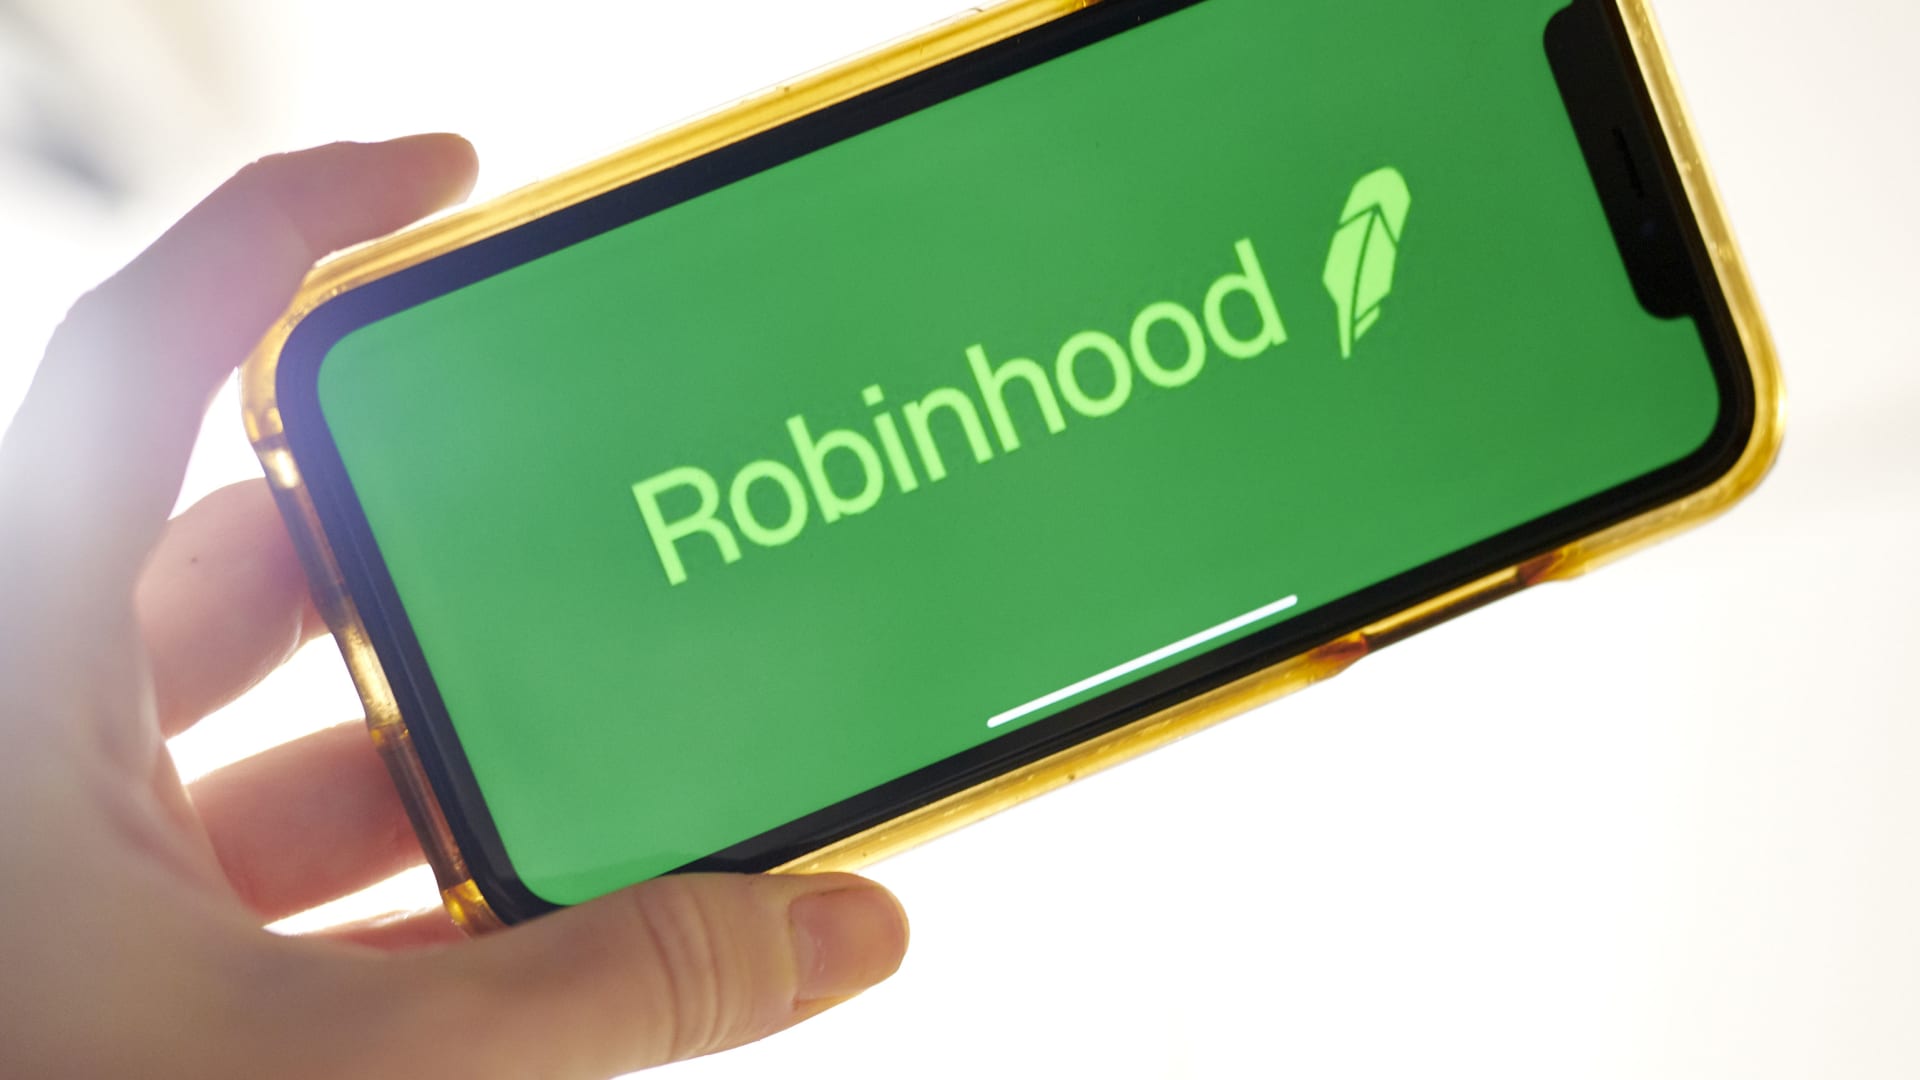 Robinhood shares fall as retail brokerage reports shrinking revenue, fewer activ..